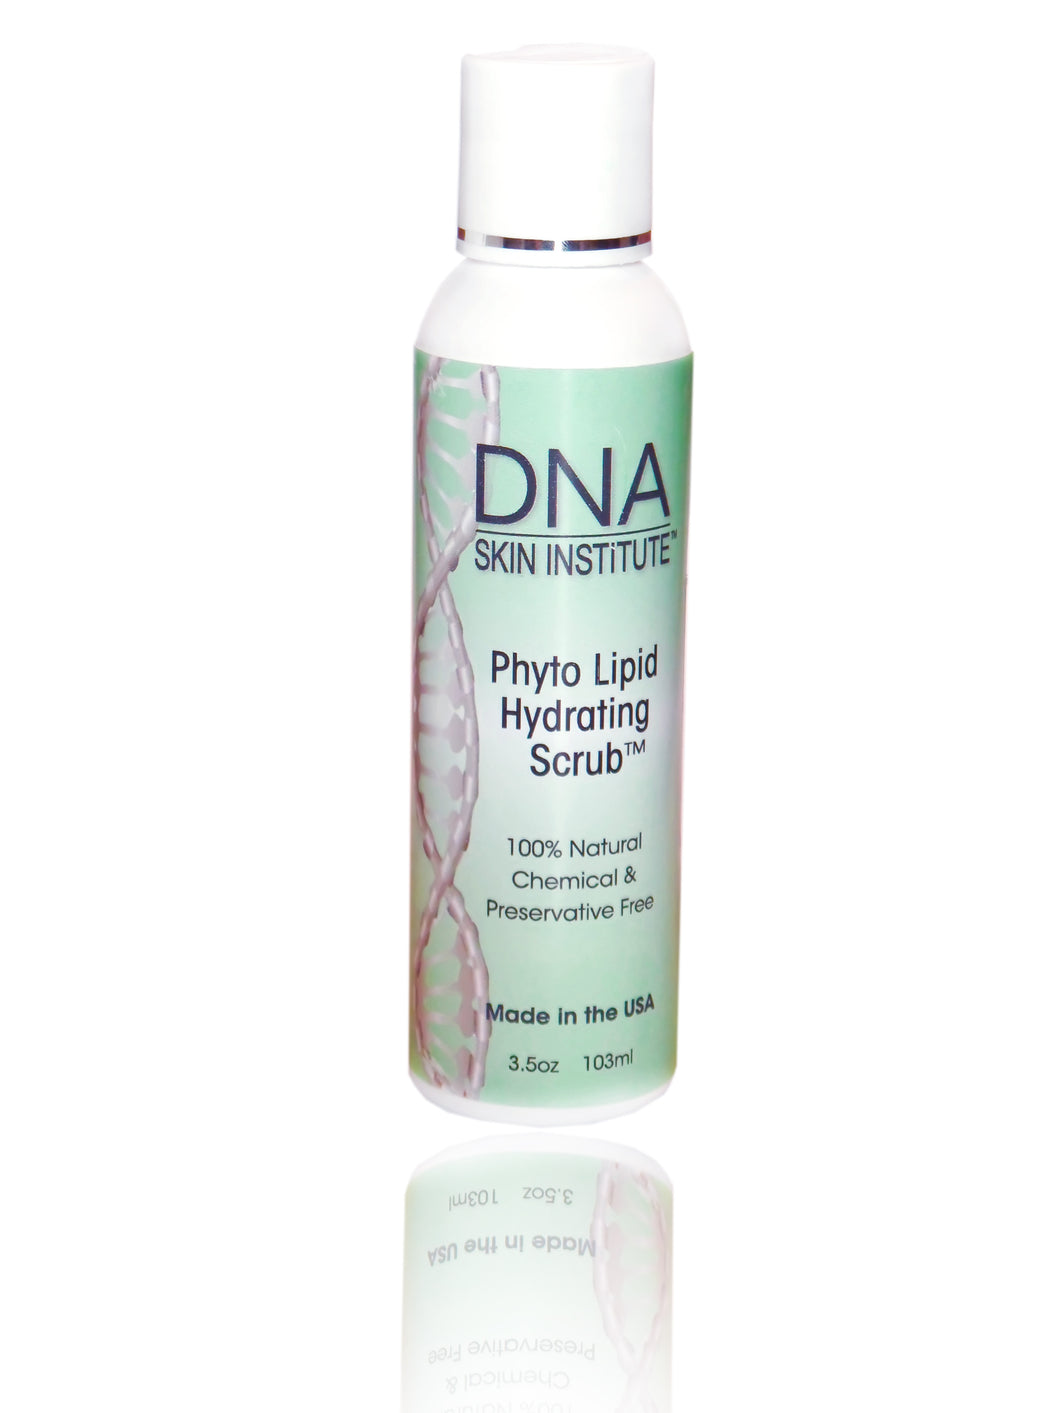 Phyto-Lipid Hydrating Scrub